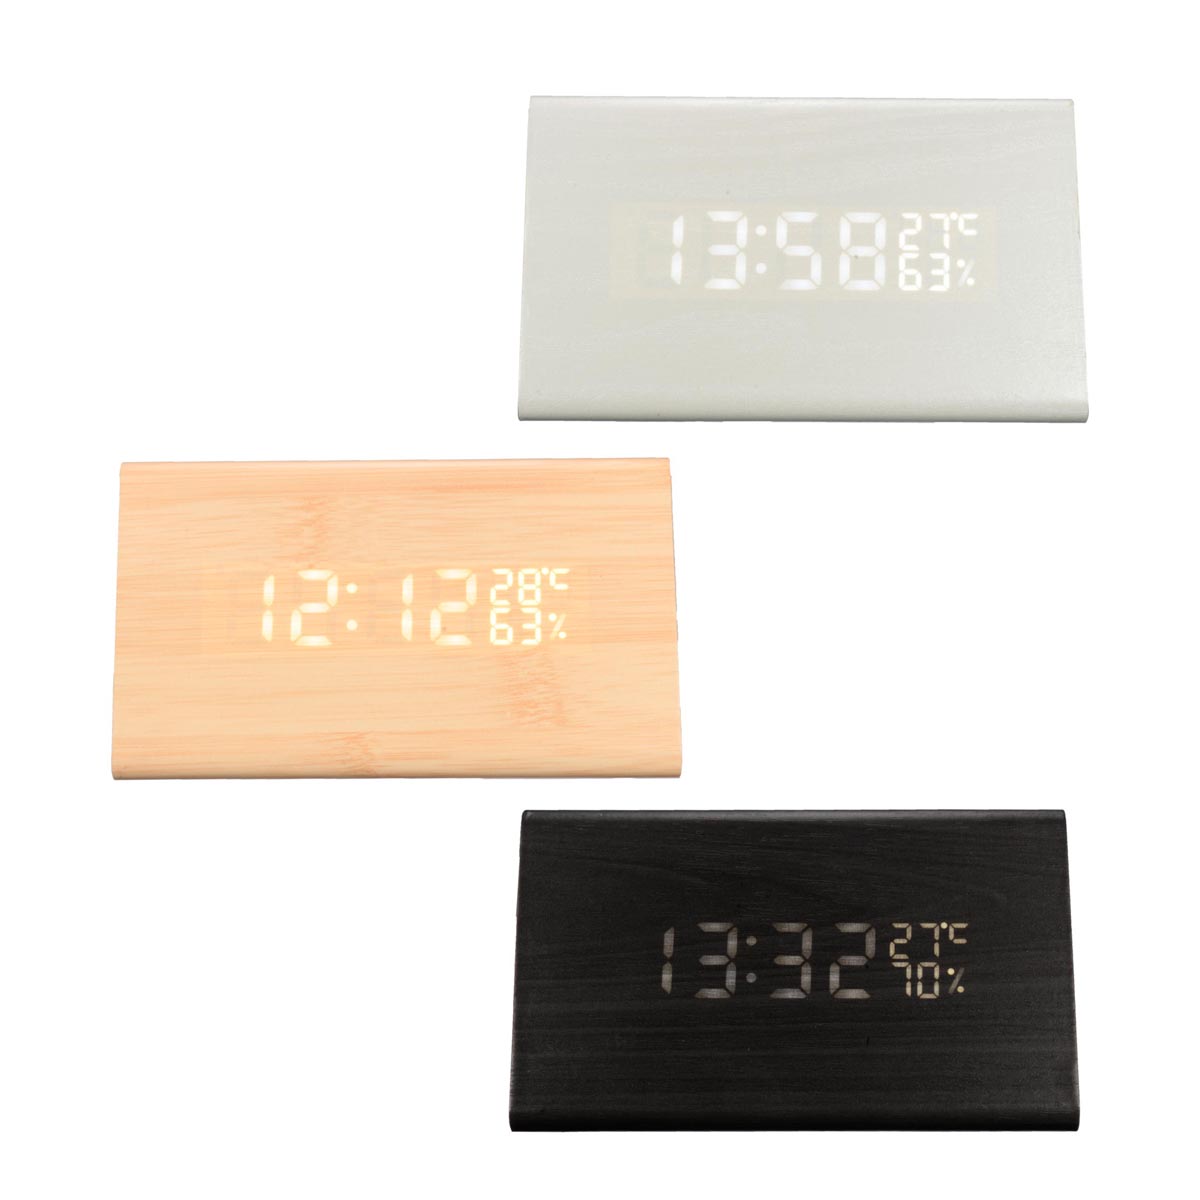 Voice-activated-Triangle-Alarm-Clock-Humidity-Temperature-Sensing-Wooden-Desk-Clock-LED-Digital-Disp-1926307-8